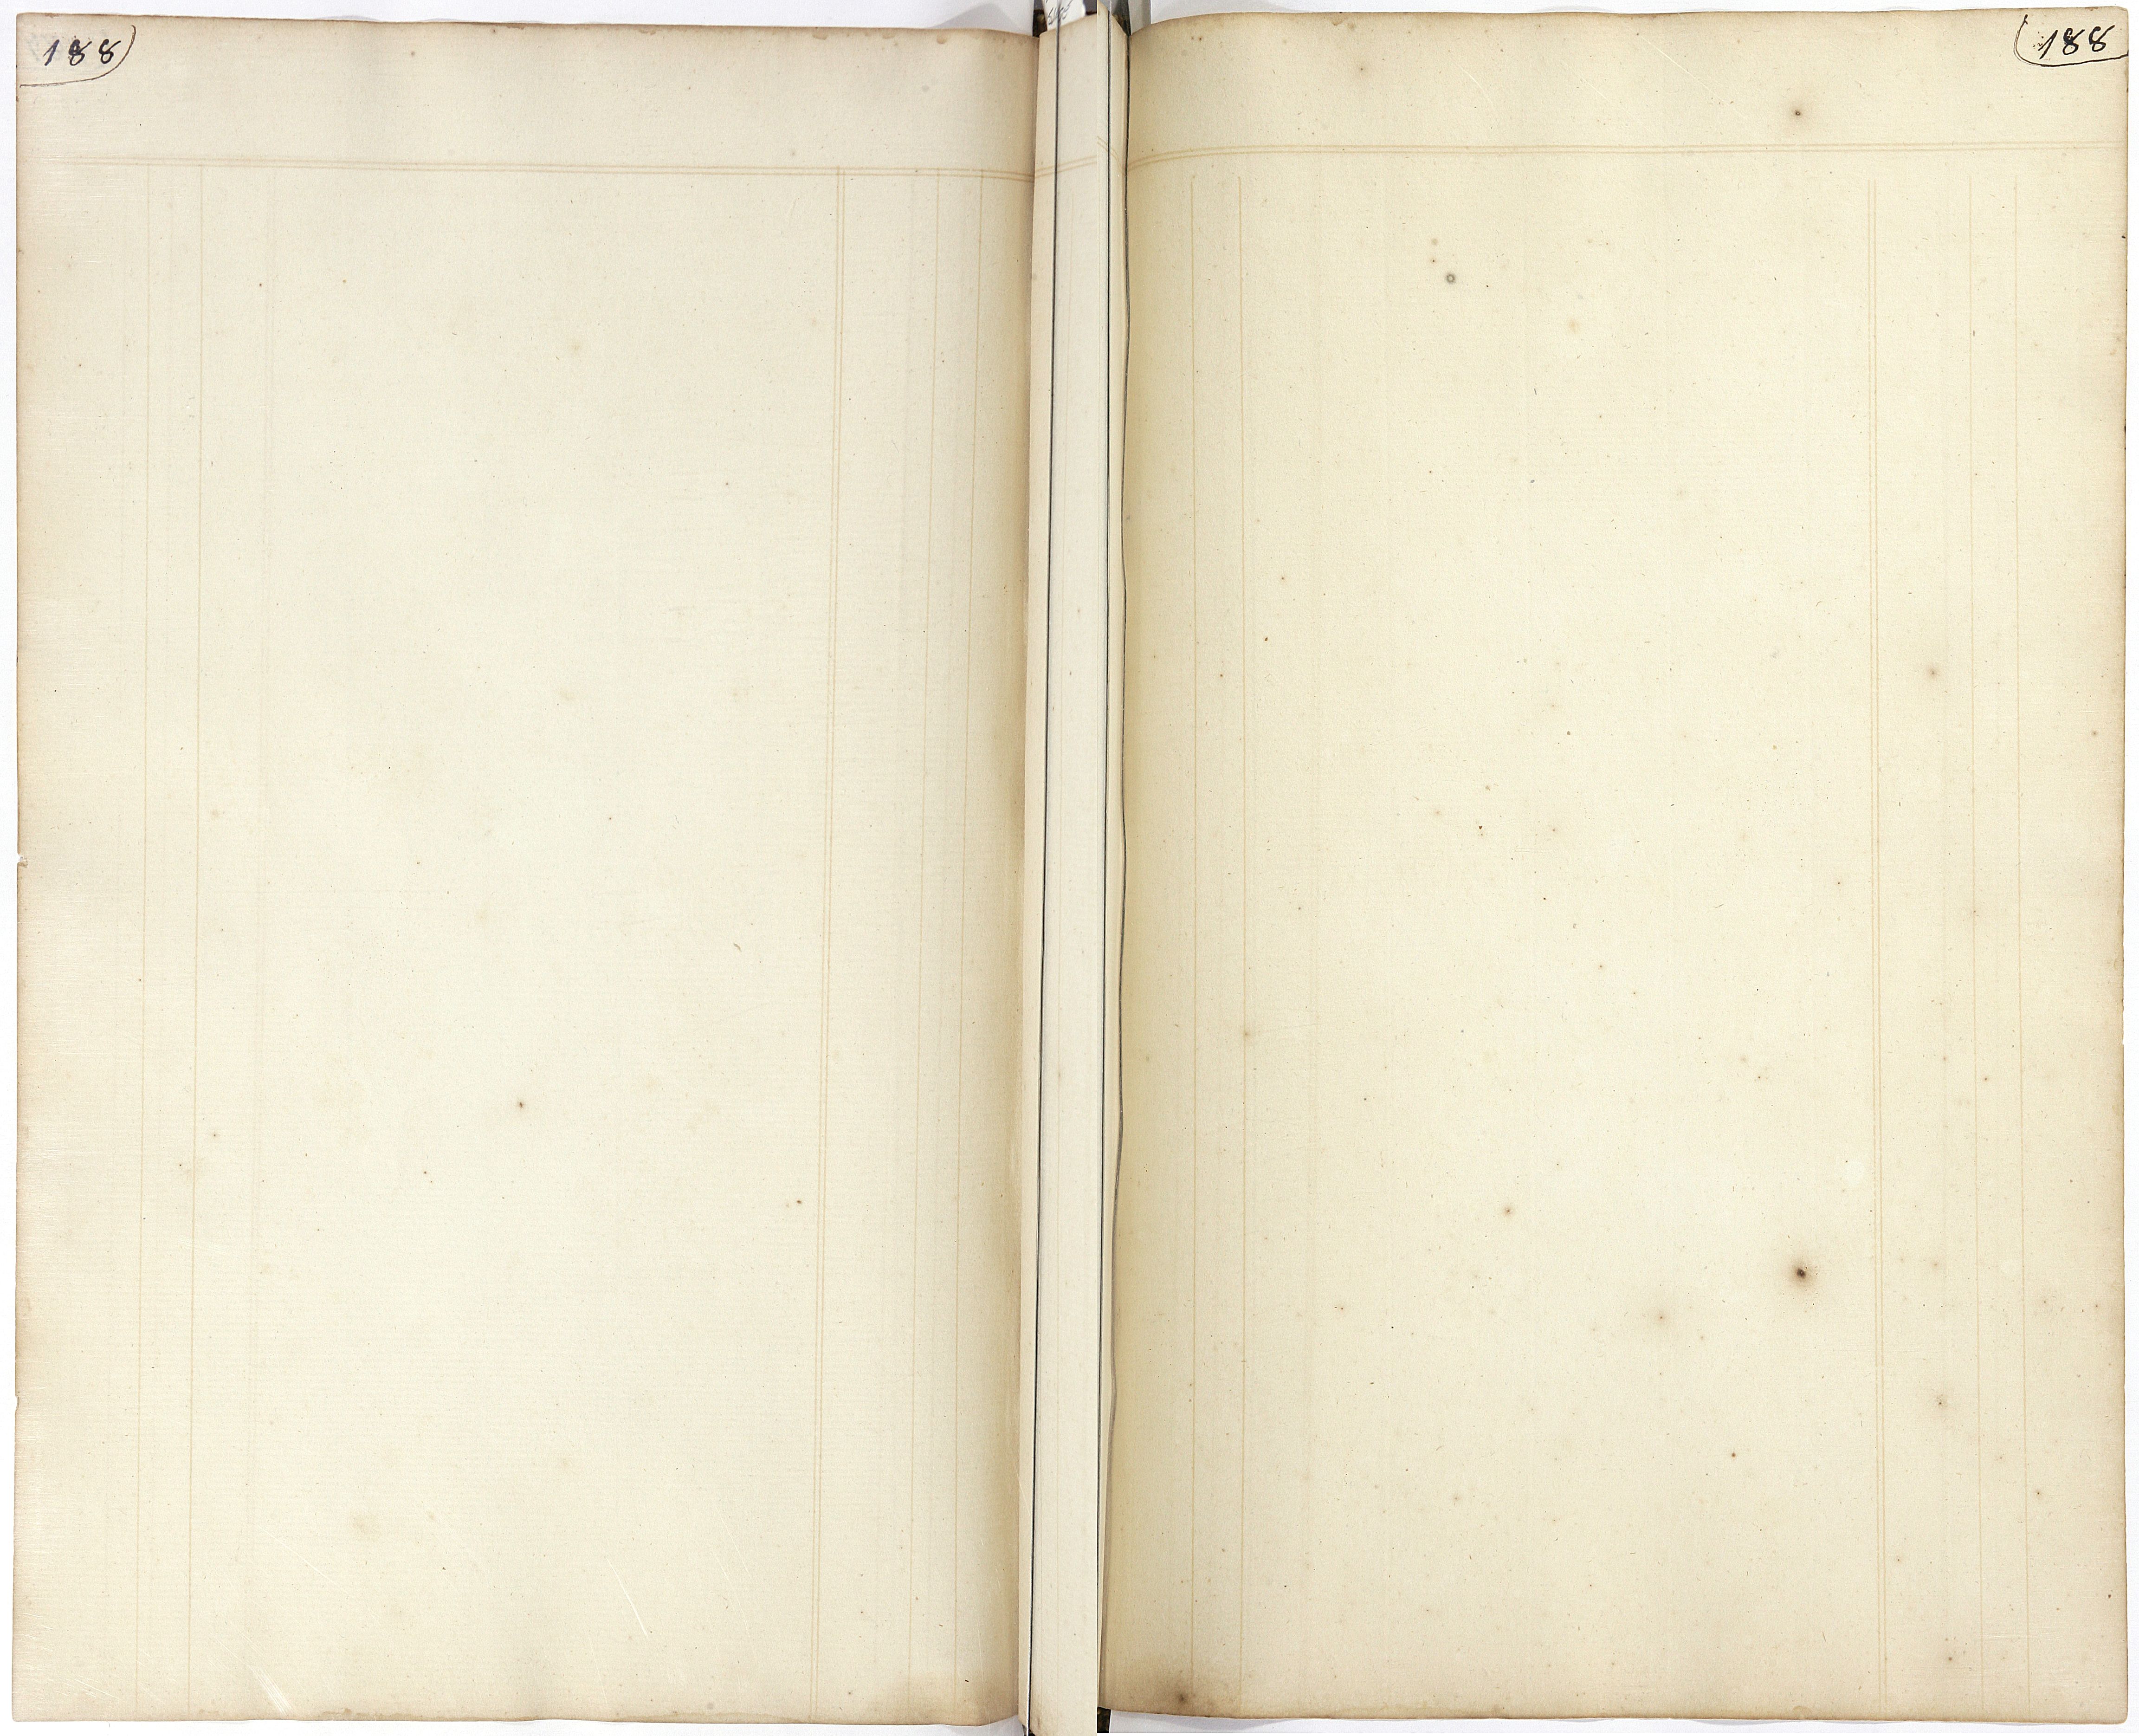 Image of Folio 188 (transcription below)